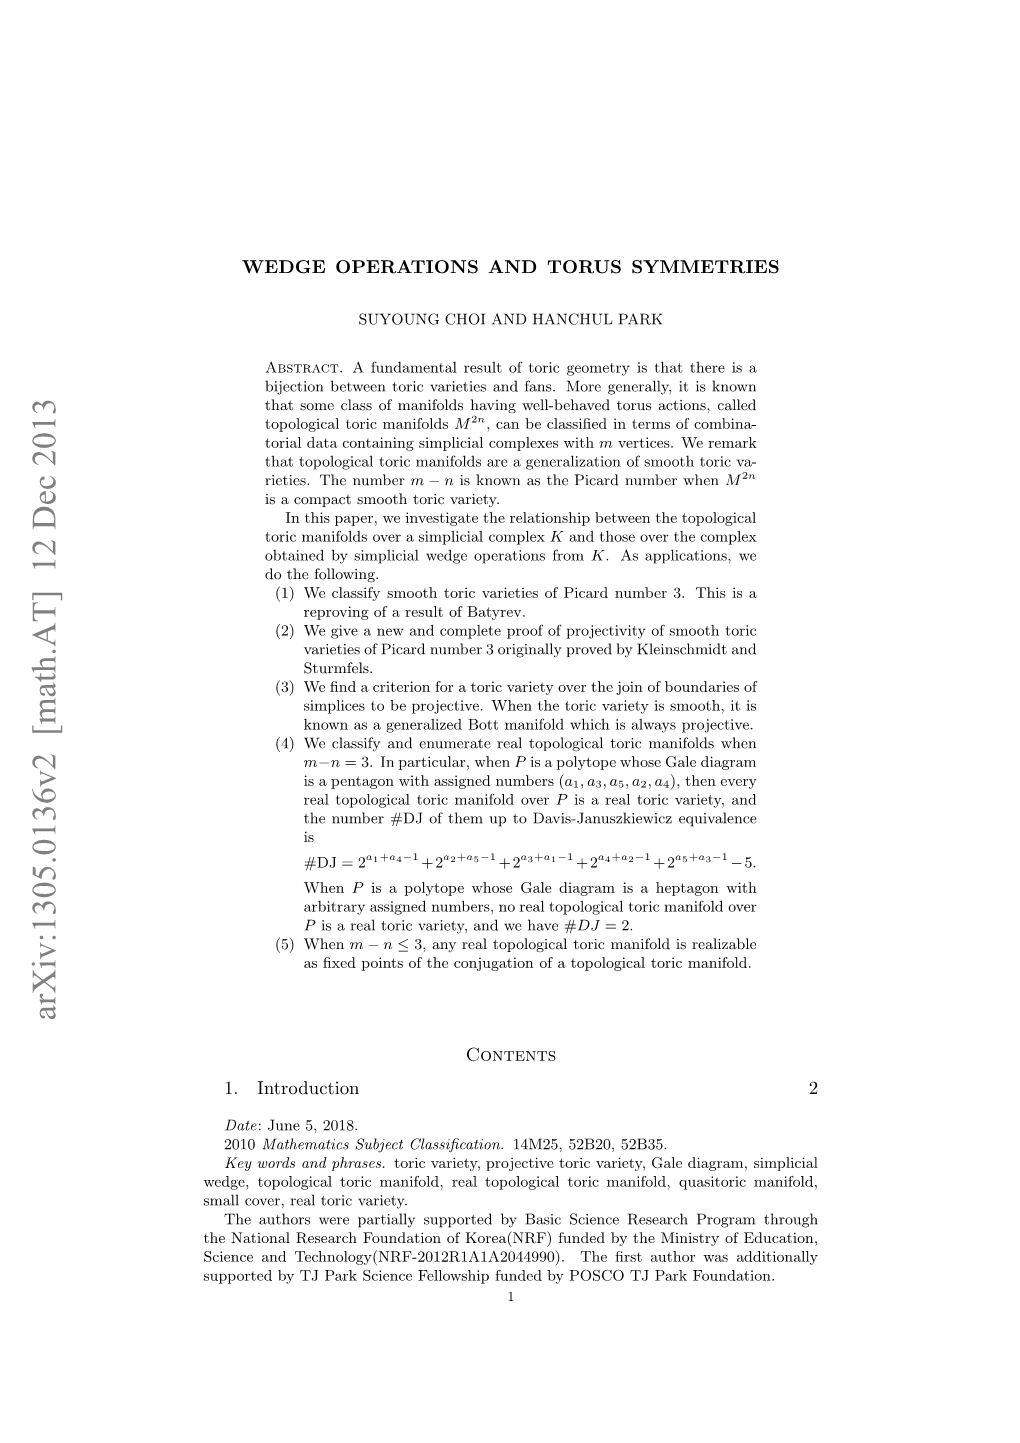 Wedge Operations and Torus Symmetries